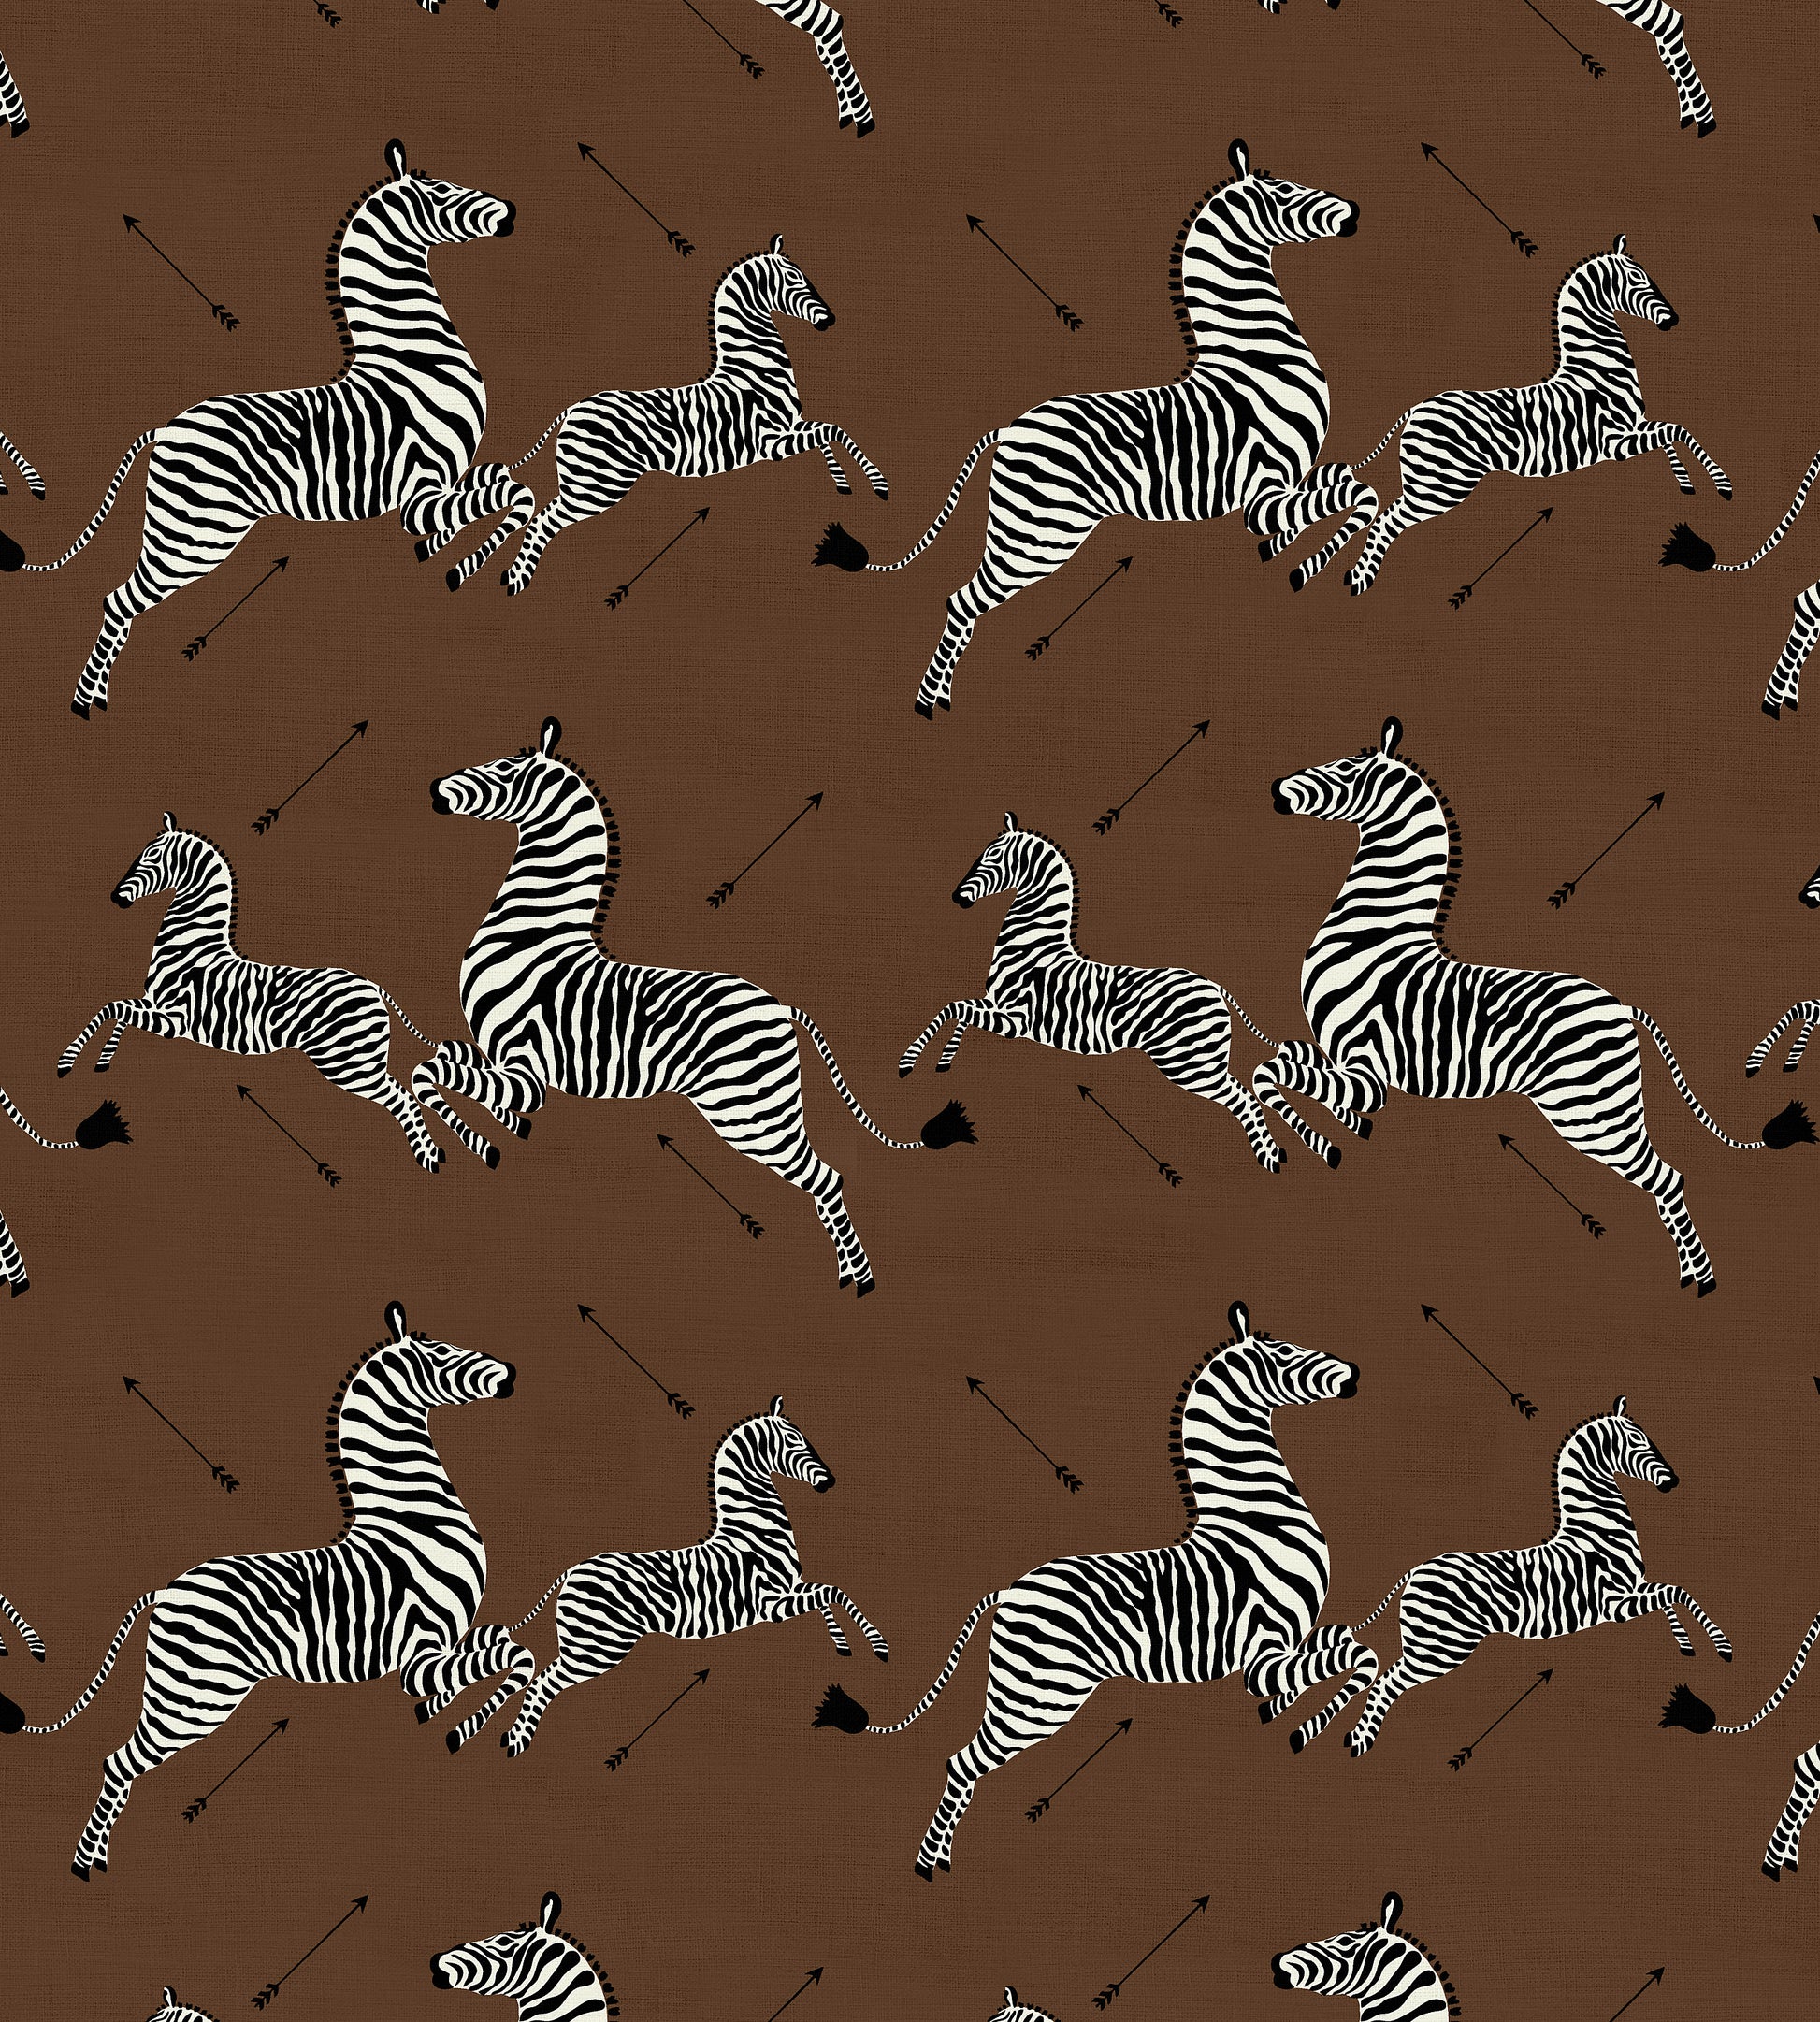 Purchase Scalamandre Fabric Pattern# SC 000316496M, Zebras - Fabric Safari Brown 3